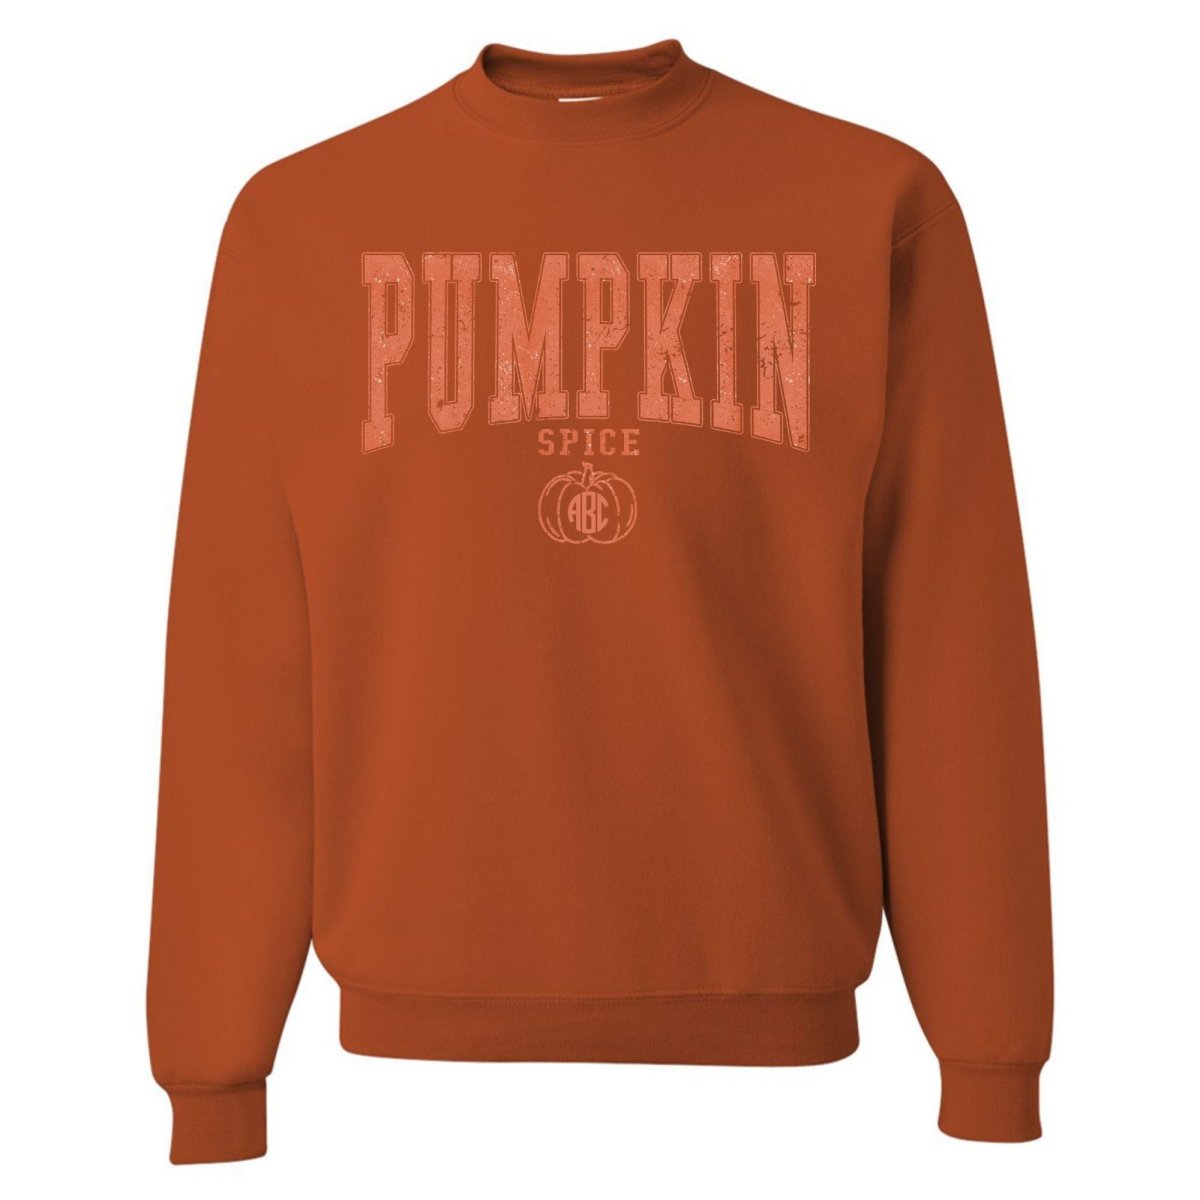 Monogrammed 'Pumpkin Spice Varsity' Crewneck Sweatshirt - United Monograms